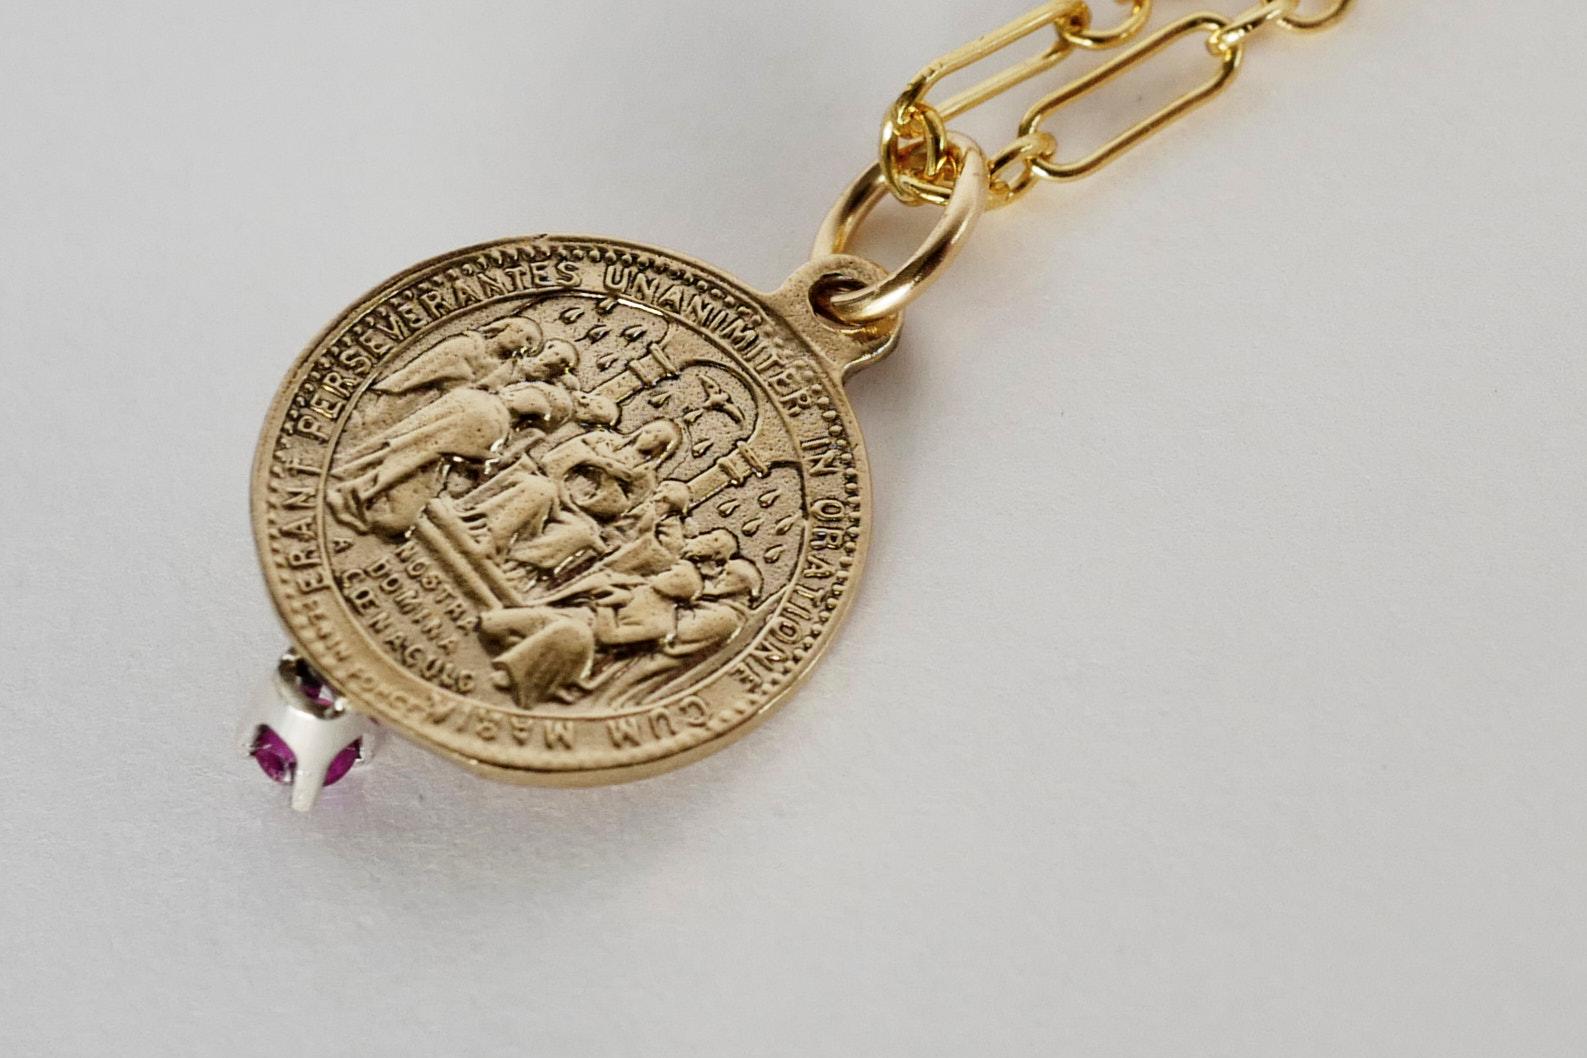 Brilliant Cut Tourmaline Sacred Heart Coin Medal Pendant Chain Necklace J Dauphin